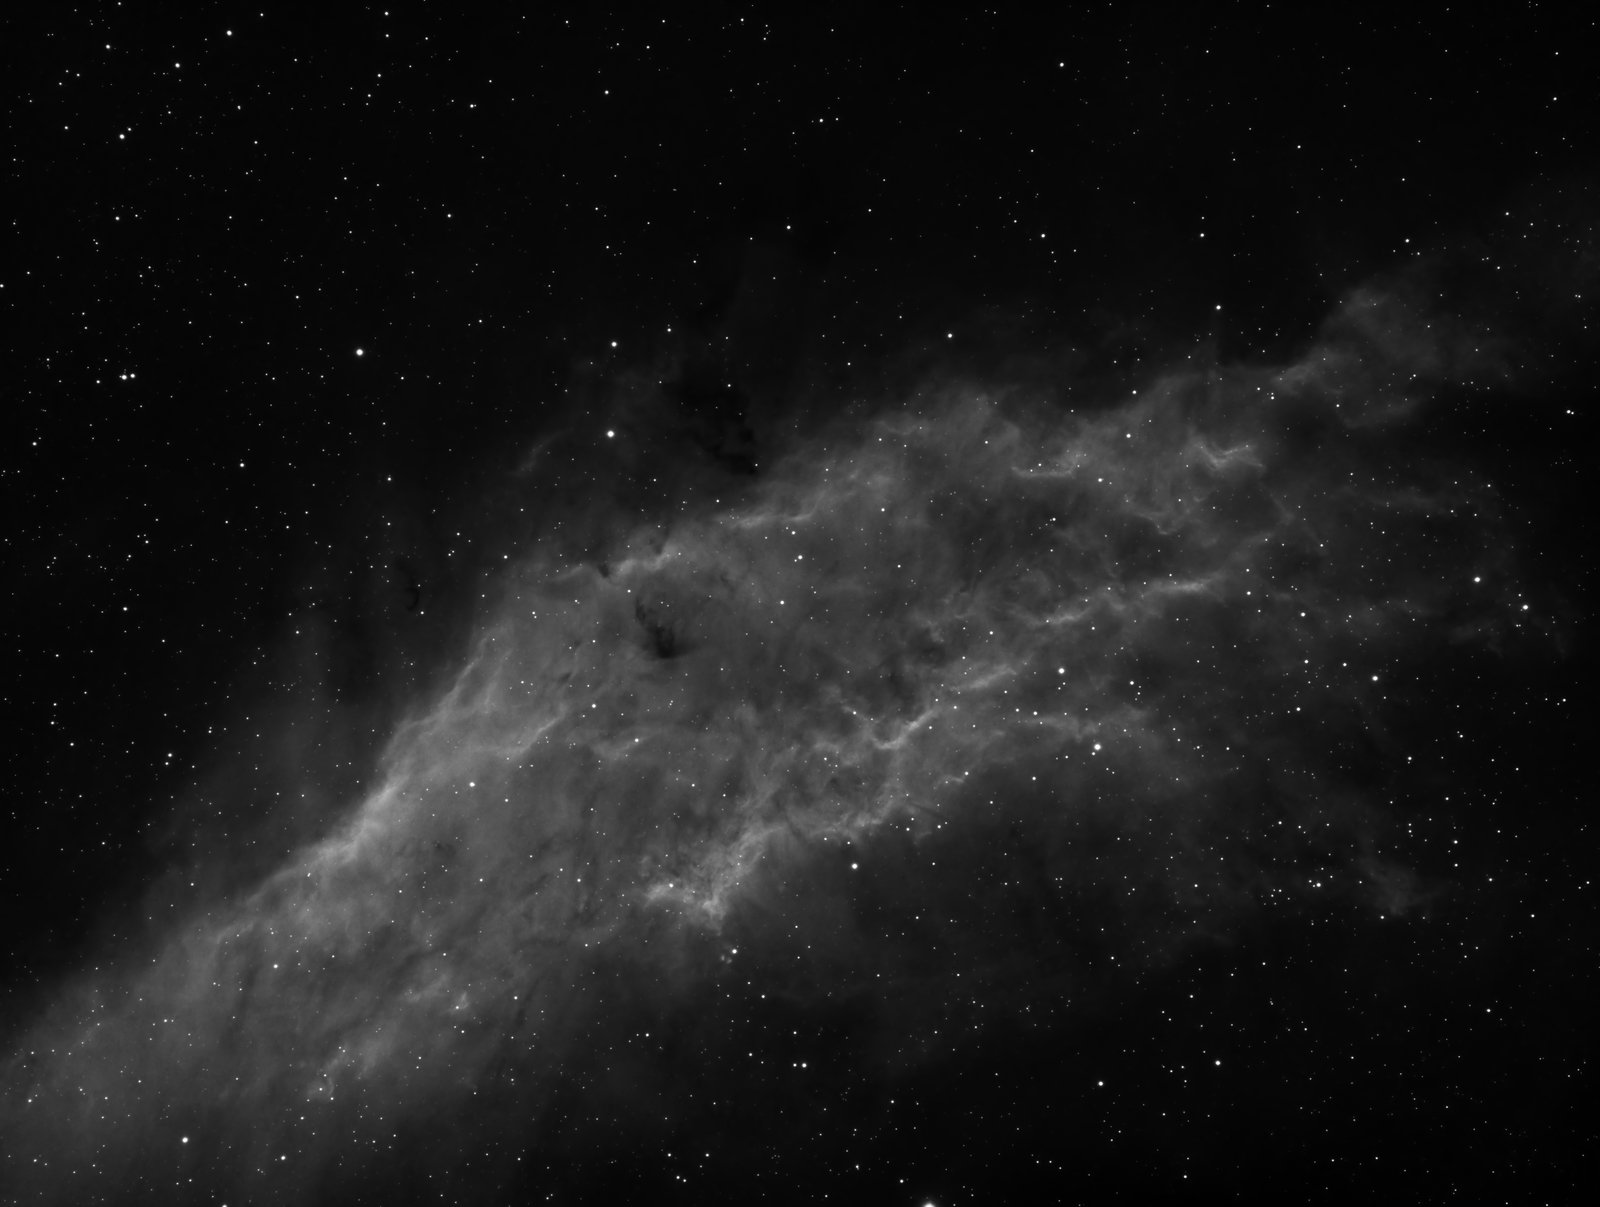 NGC1499 California Nebula in Ha